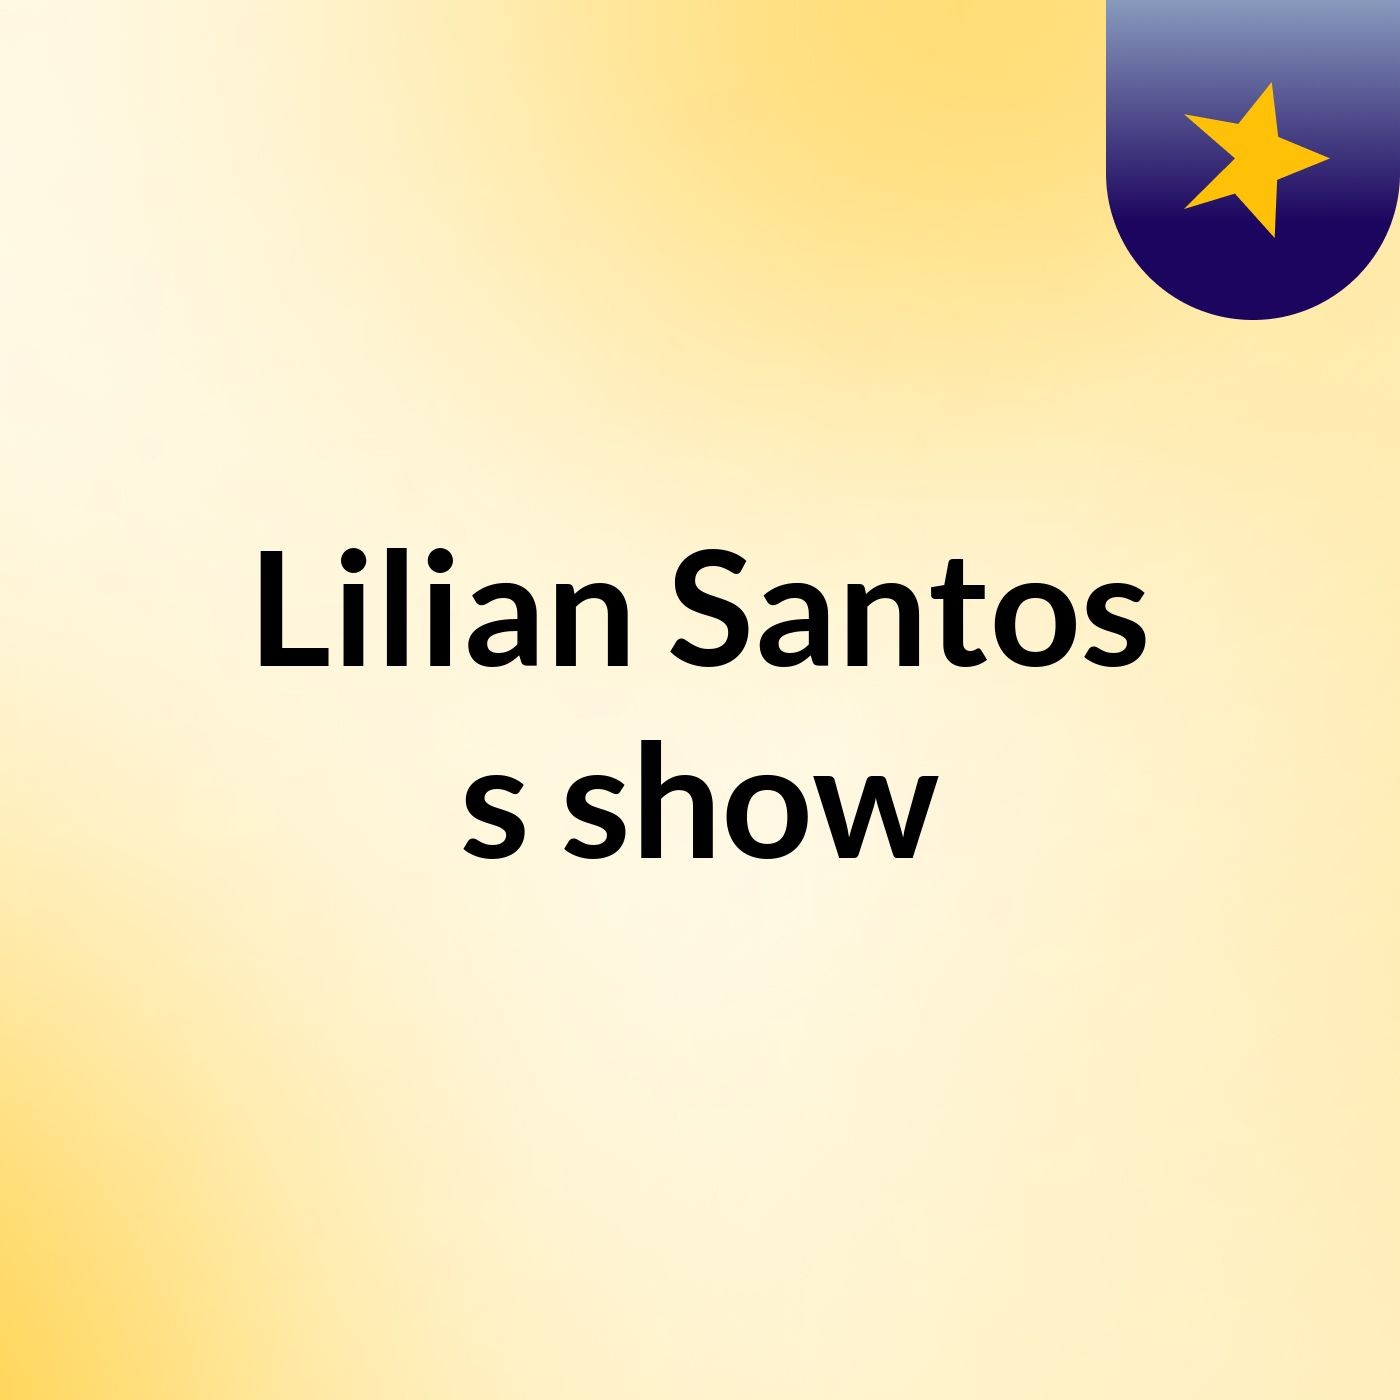 Lilian Santos's show